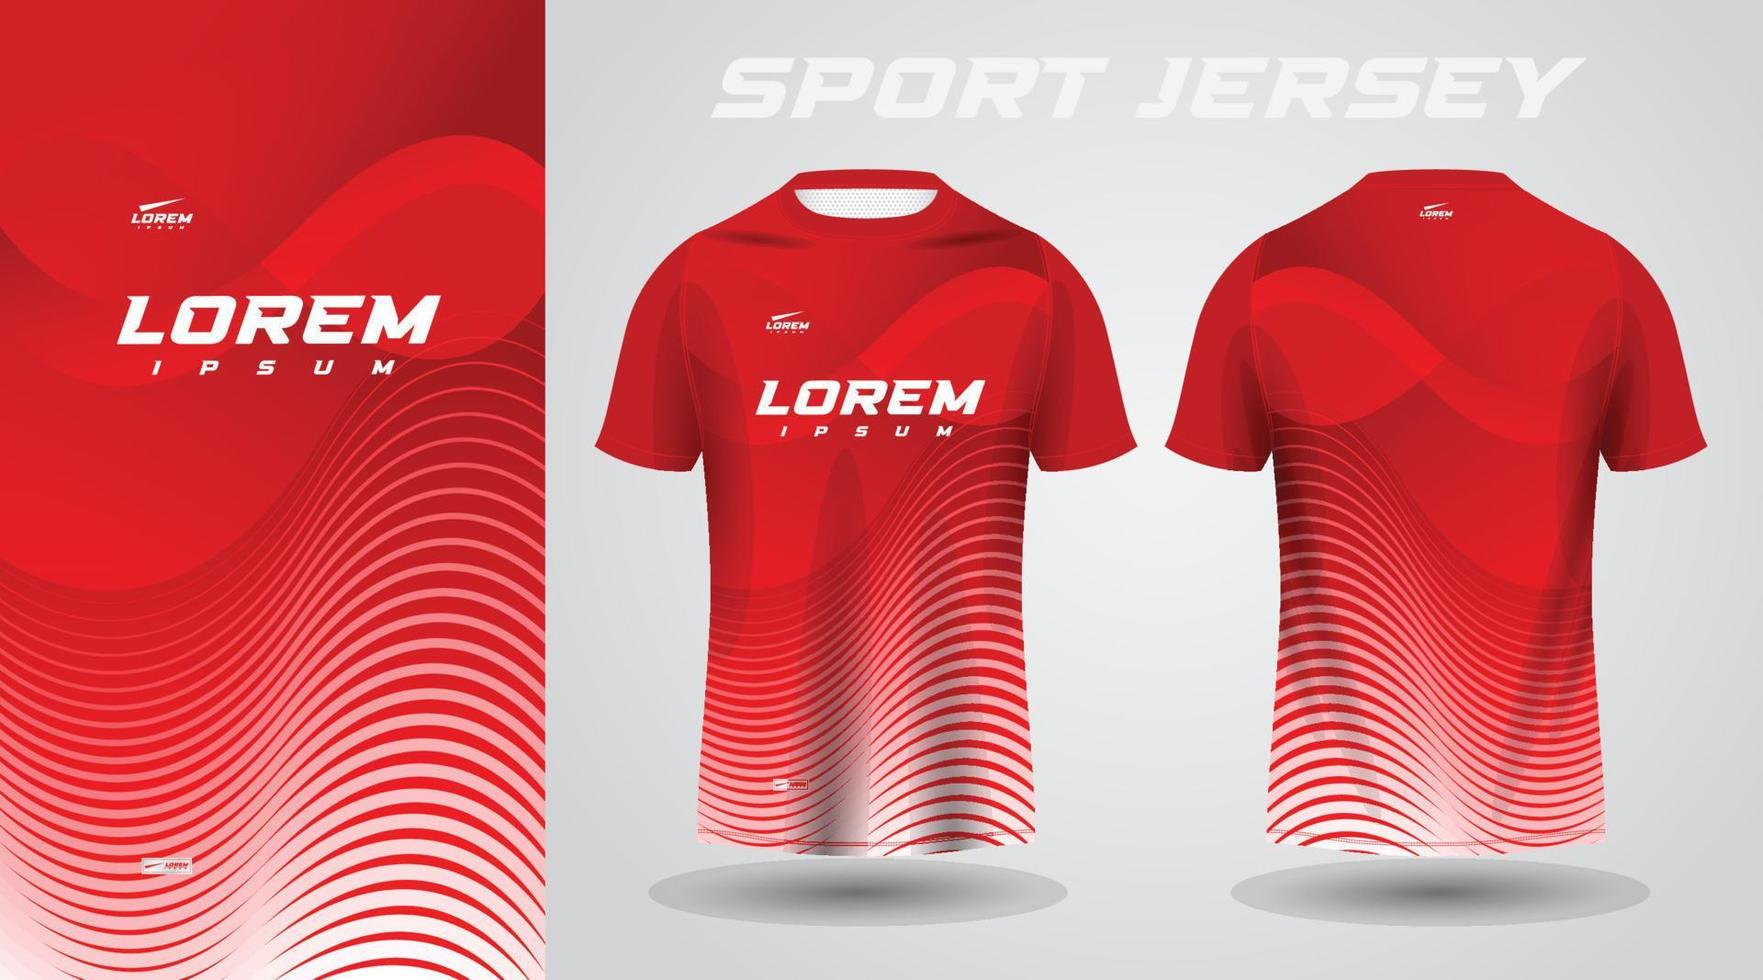 rood overhemd voetbal Amerikaans voetbal sport Jersey sjabloon ontwerp mockup vector